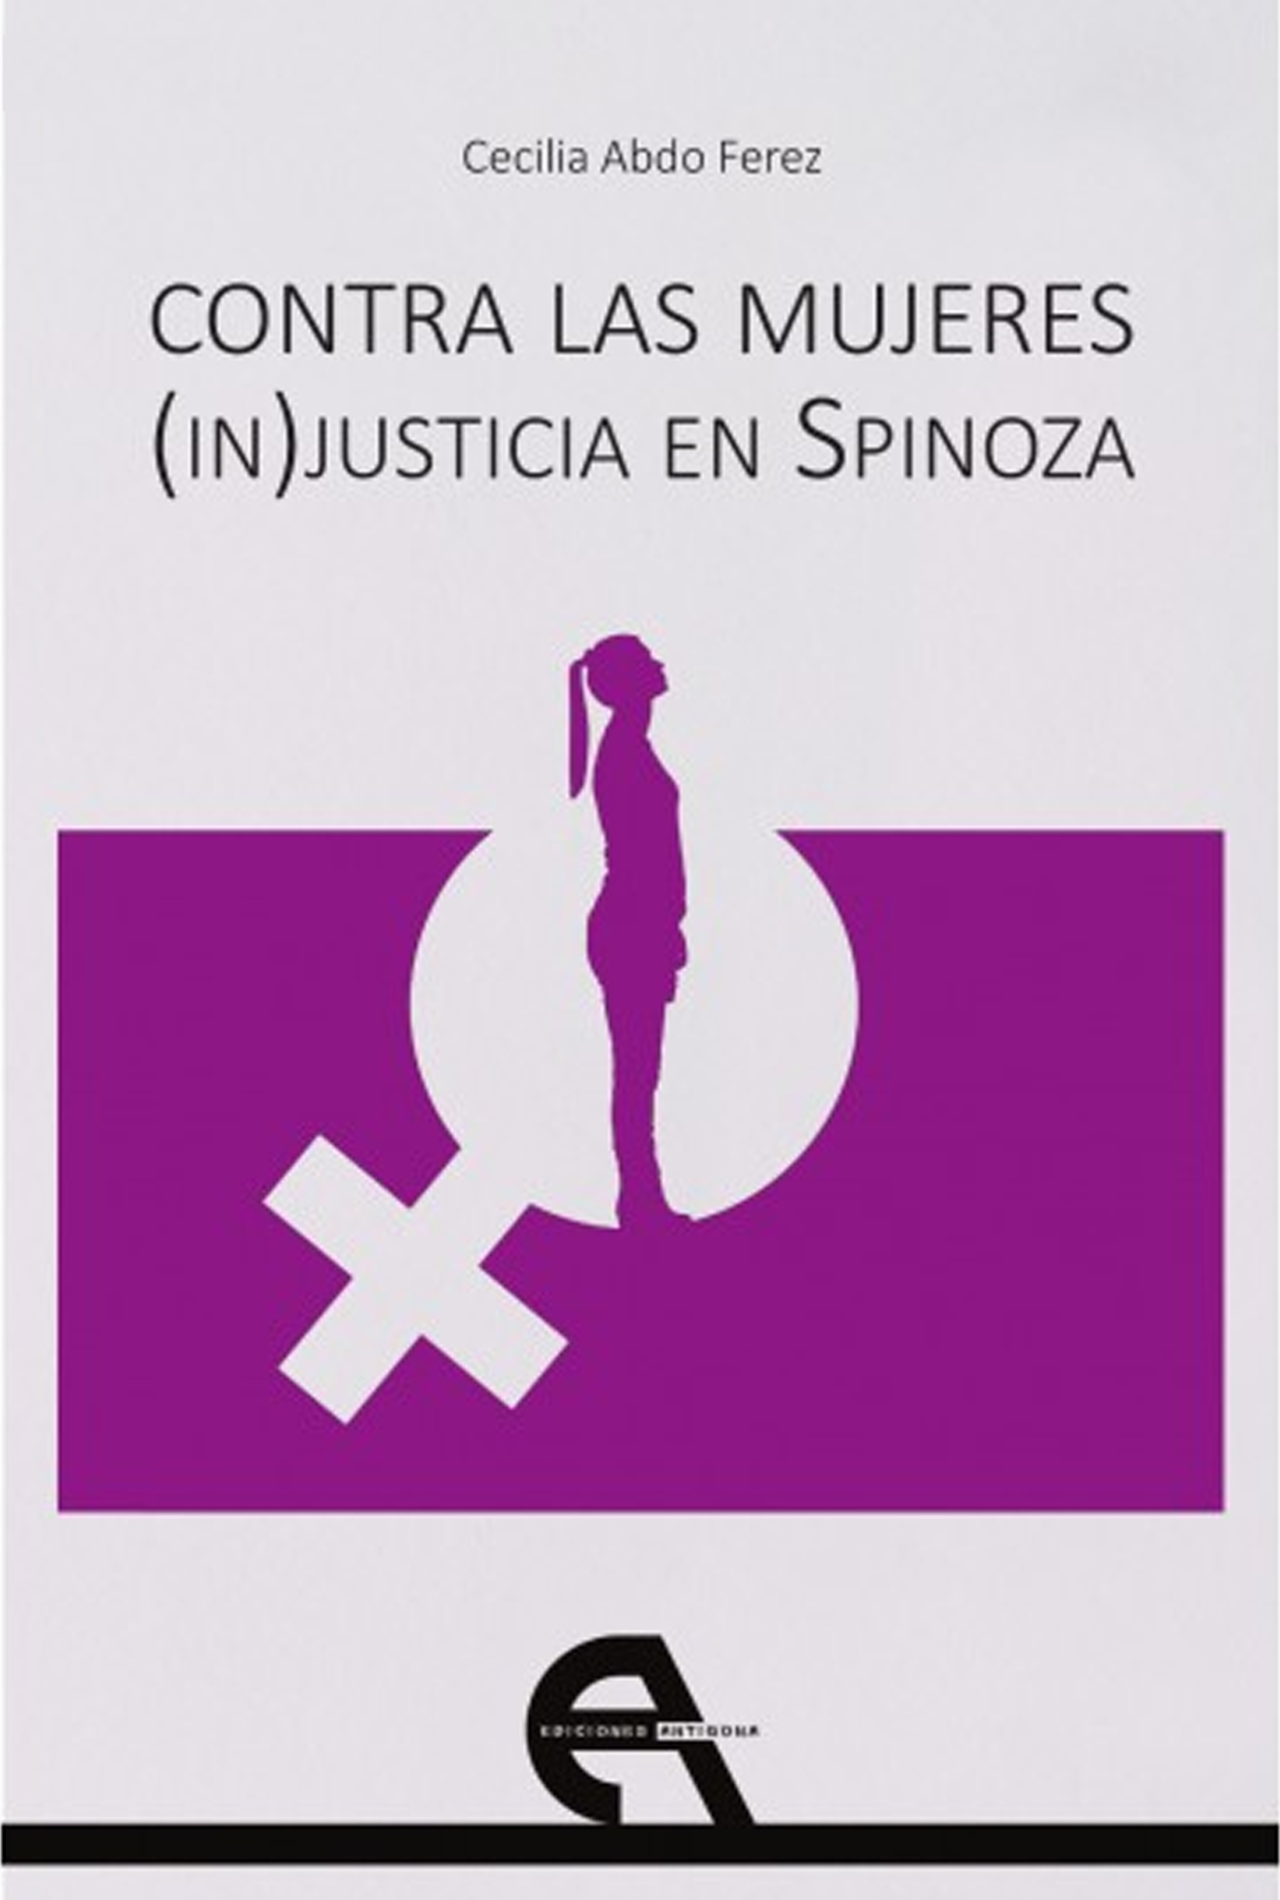 Contra-las-mujeres-1280x1900.png